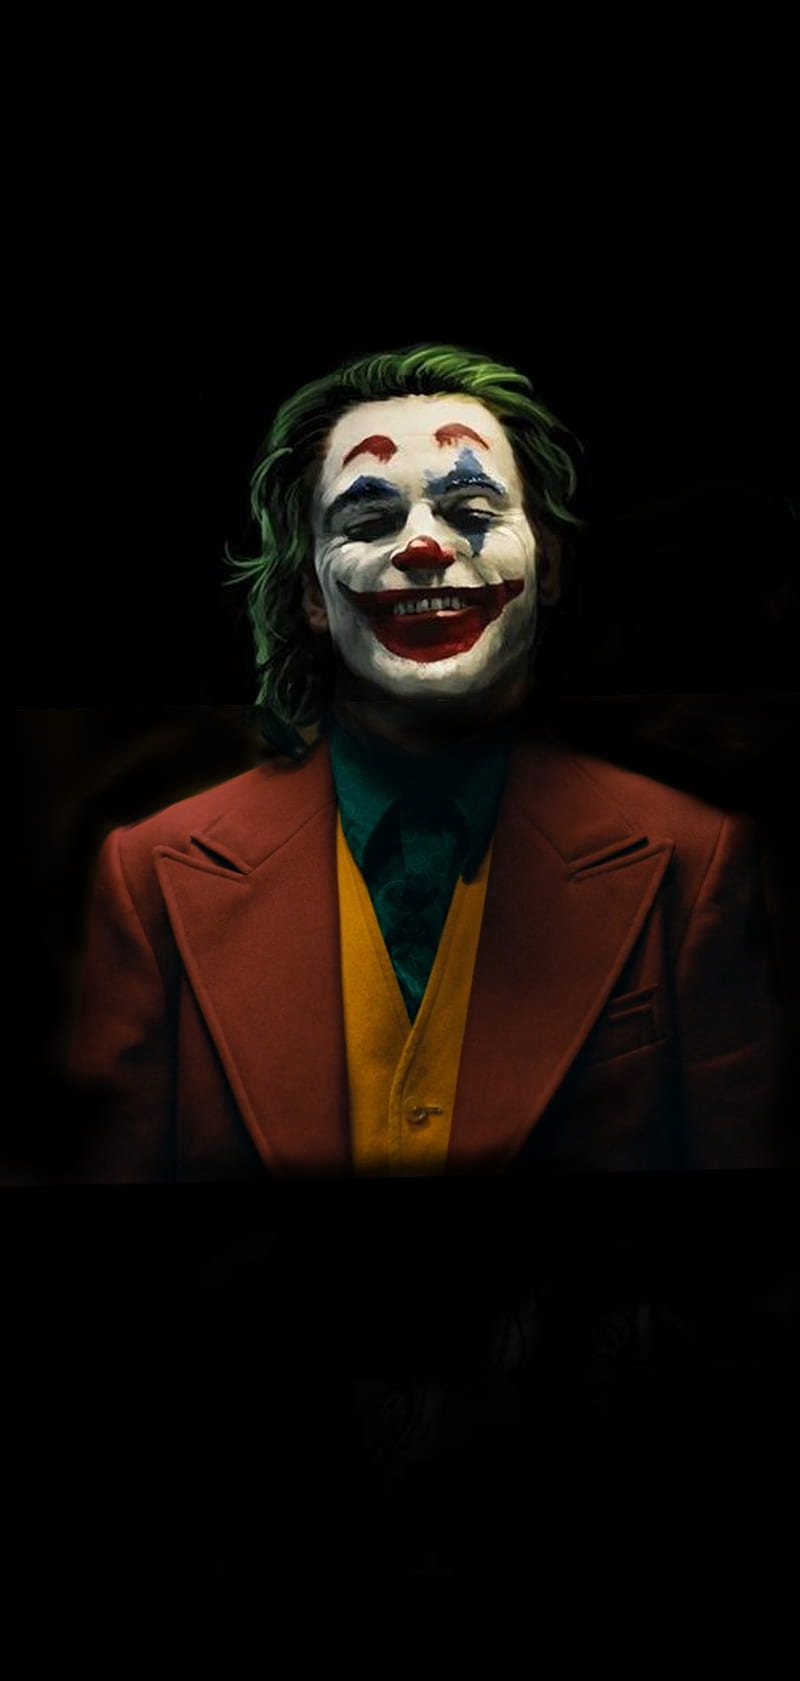 750+ Joker Mask Wallpapers Download [HD] | Download Free Images On Unsplash